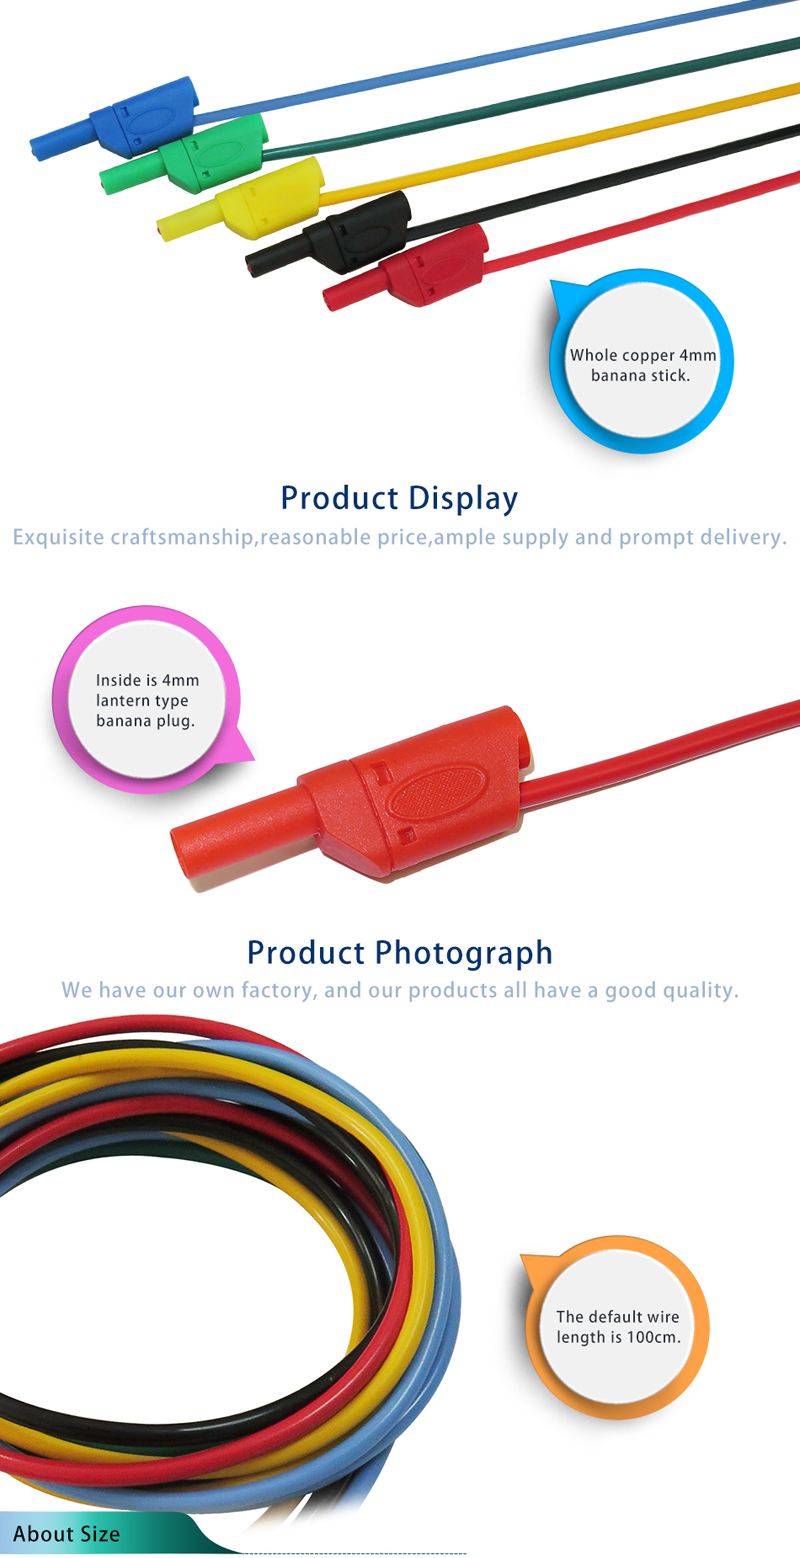 DANIU-P1050-5Pcs-5-Colours-1M-4mm-Banana-to-Banana-Plug-Soft-Silicone-Test-Cable-Lead-for-Multimeter-1136464-2